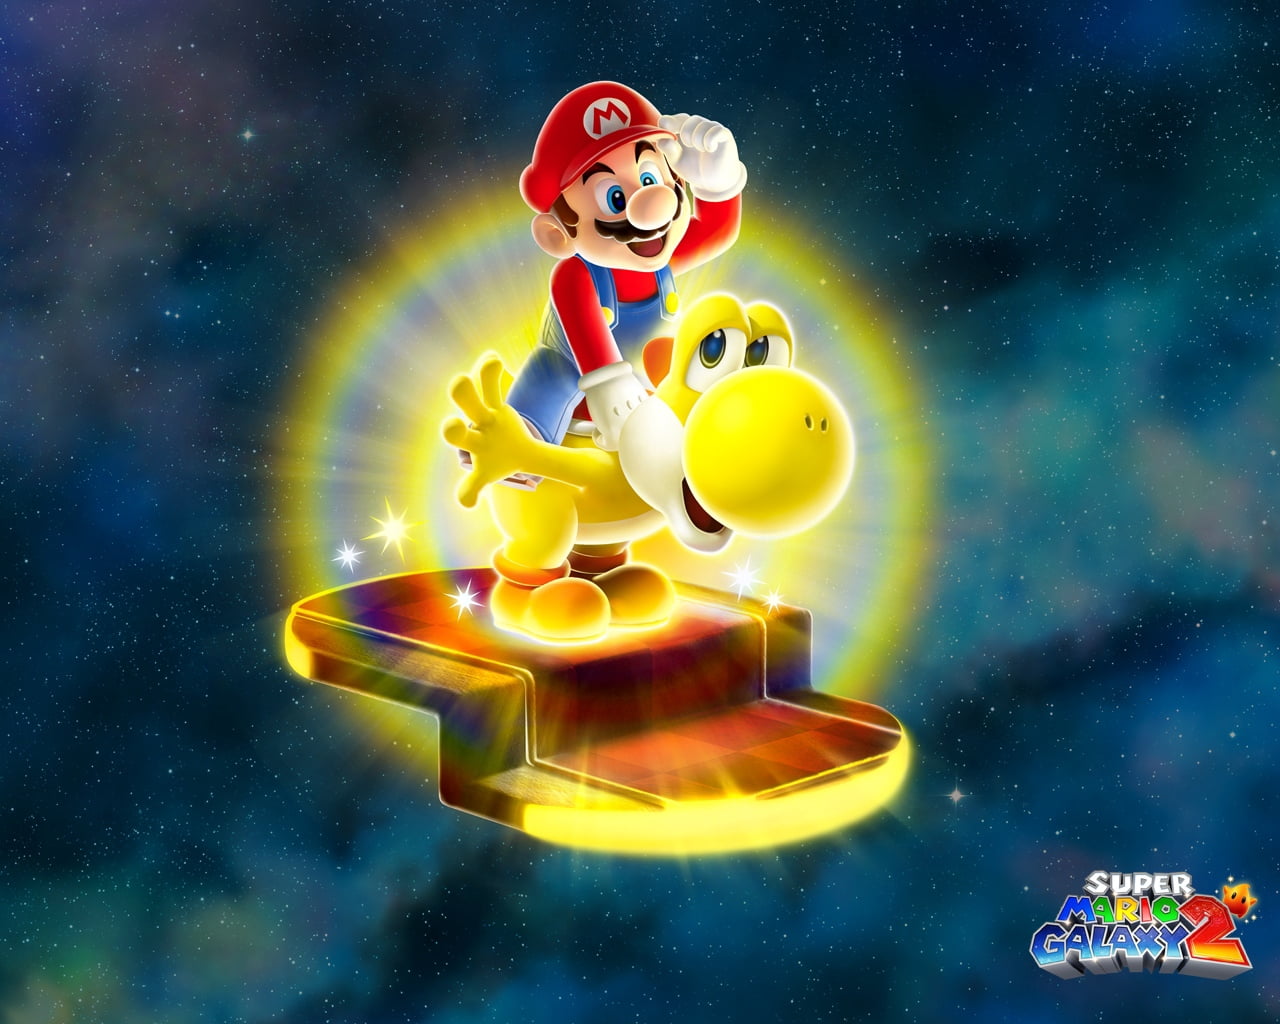 Super Mario Galaxy 2 poster, dinosaur, yellow, yoshi, star - Space